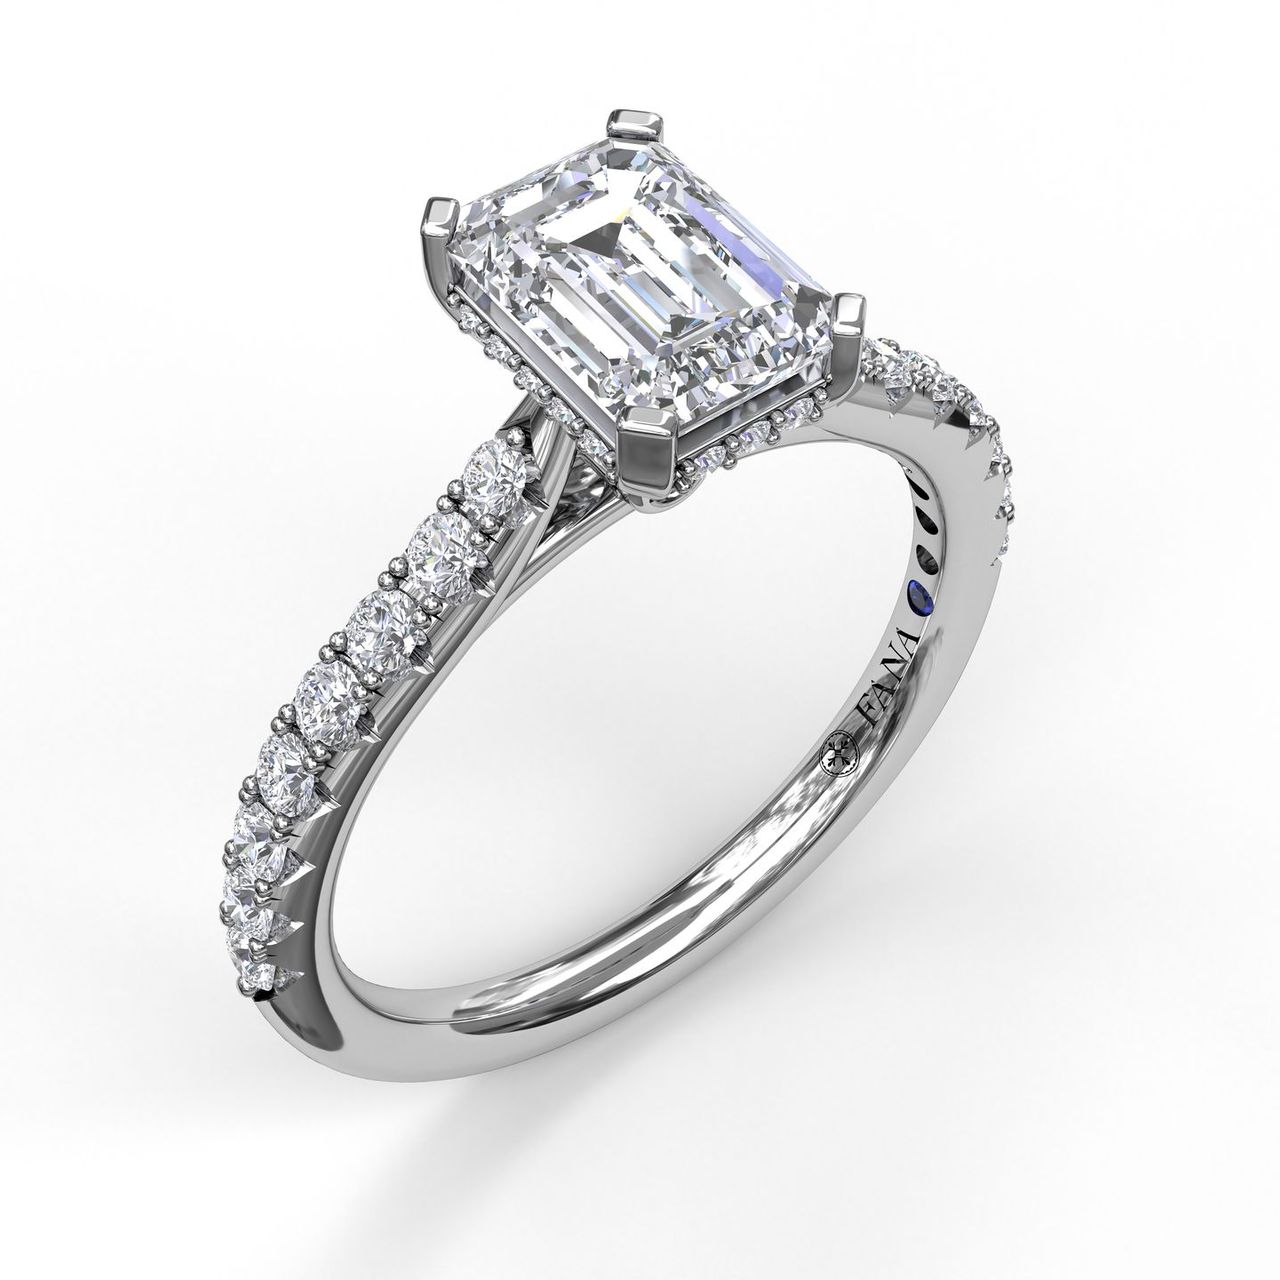 FANA 14 Karat White Gold with Side Stones Emerald Shape Engagement Ring S3023WG/SP